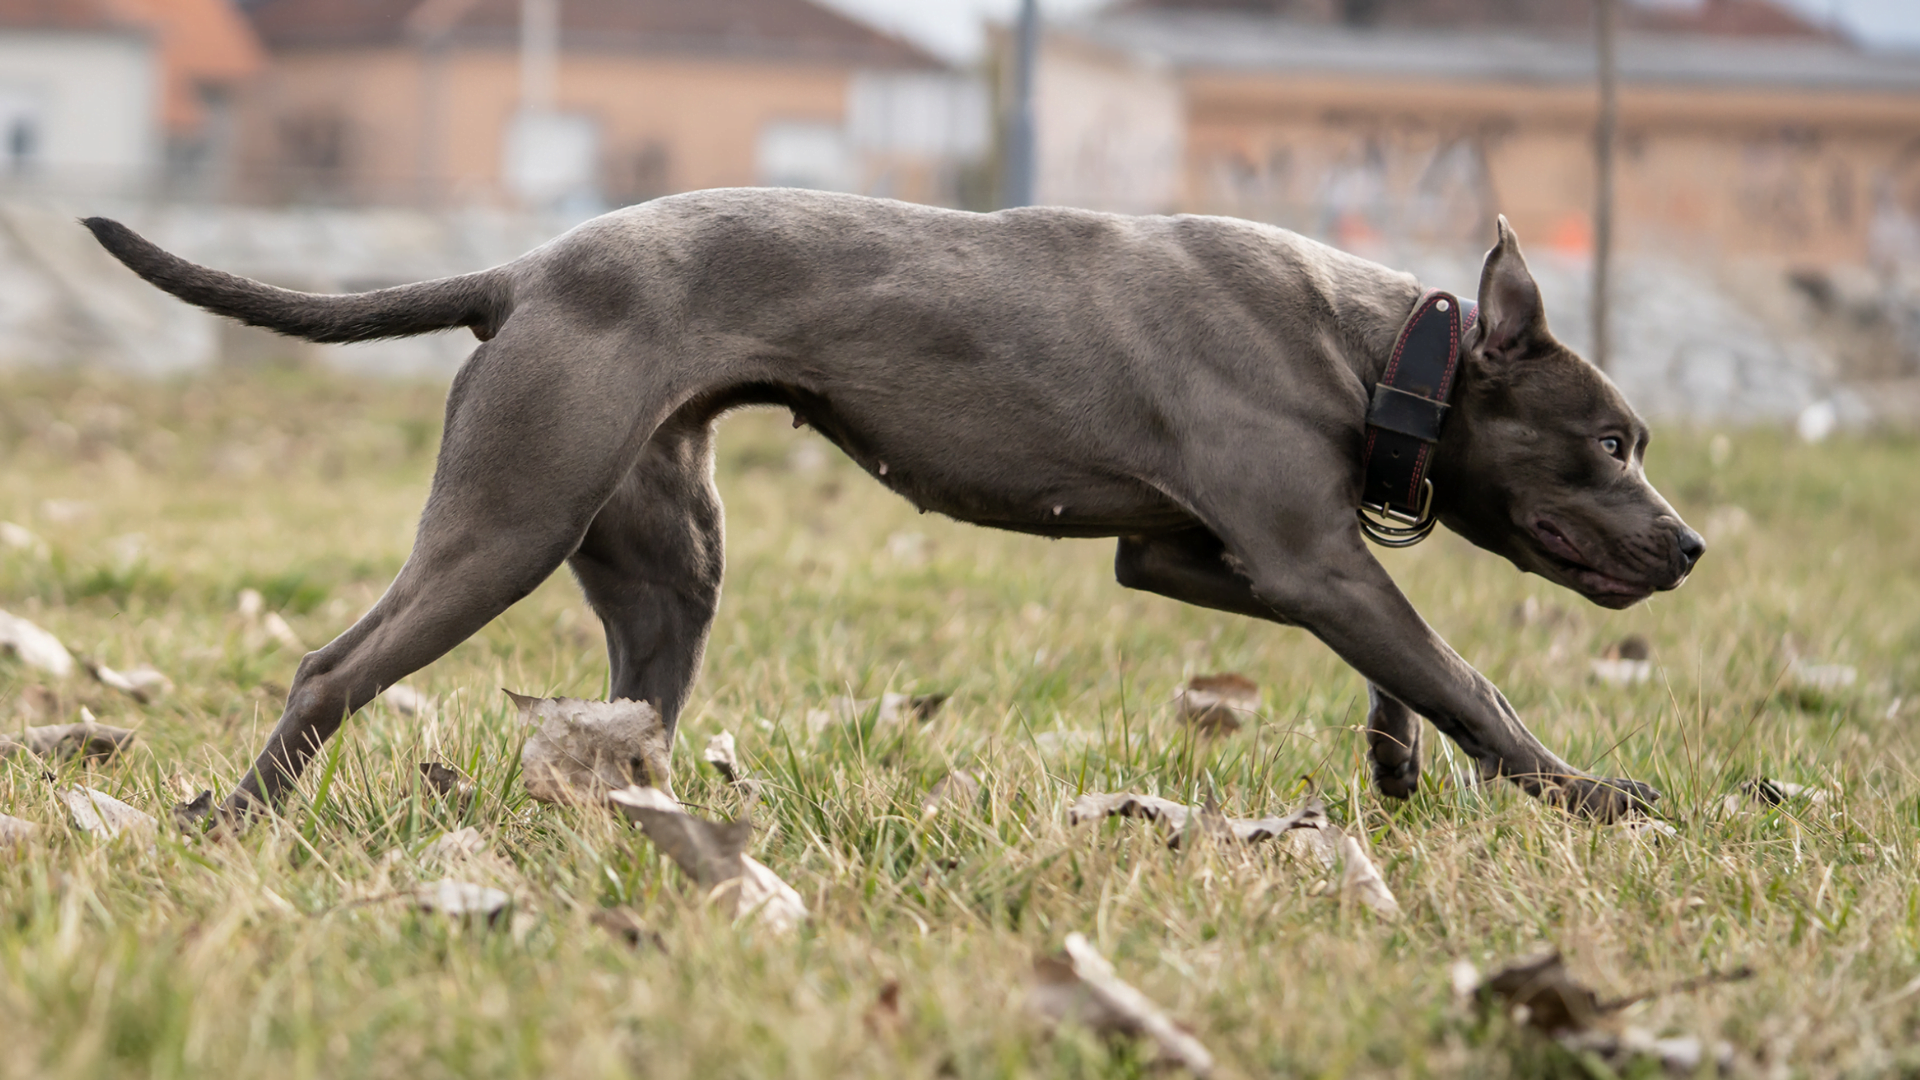 The real American Pit Bull Terrier (Pitbull, Pit Bull, or APBT)